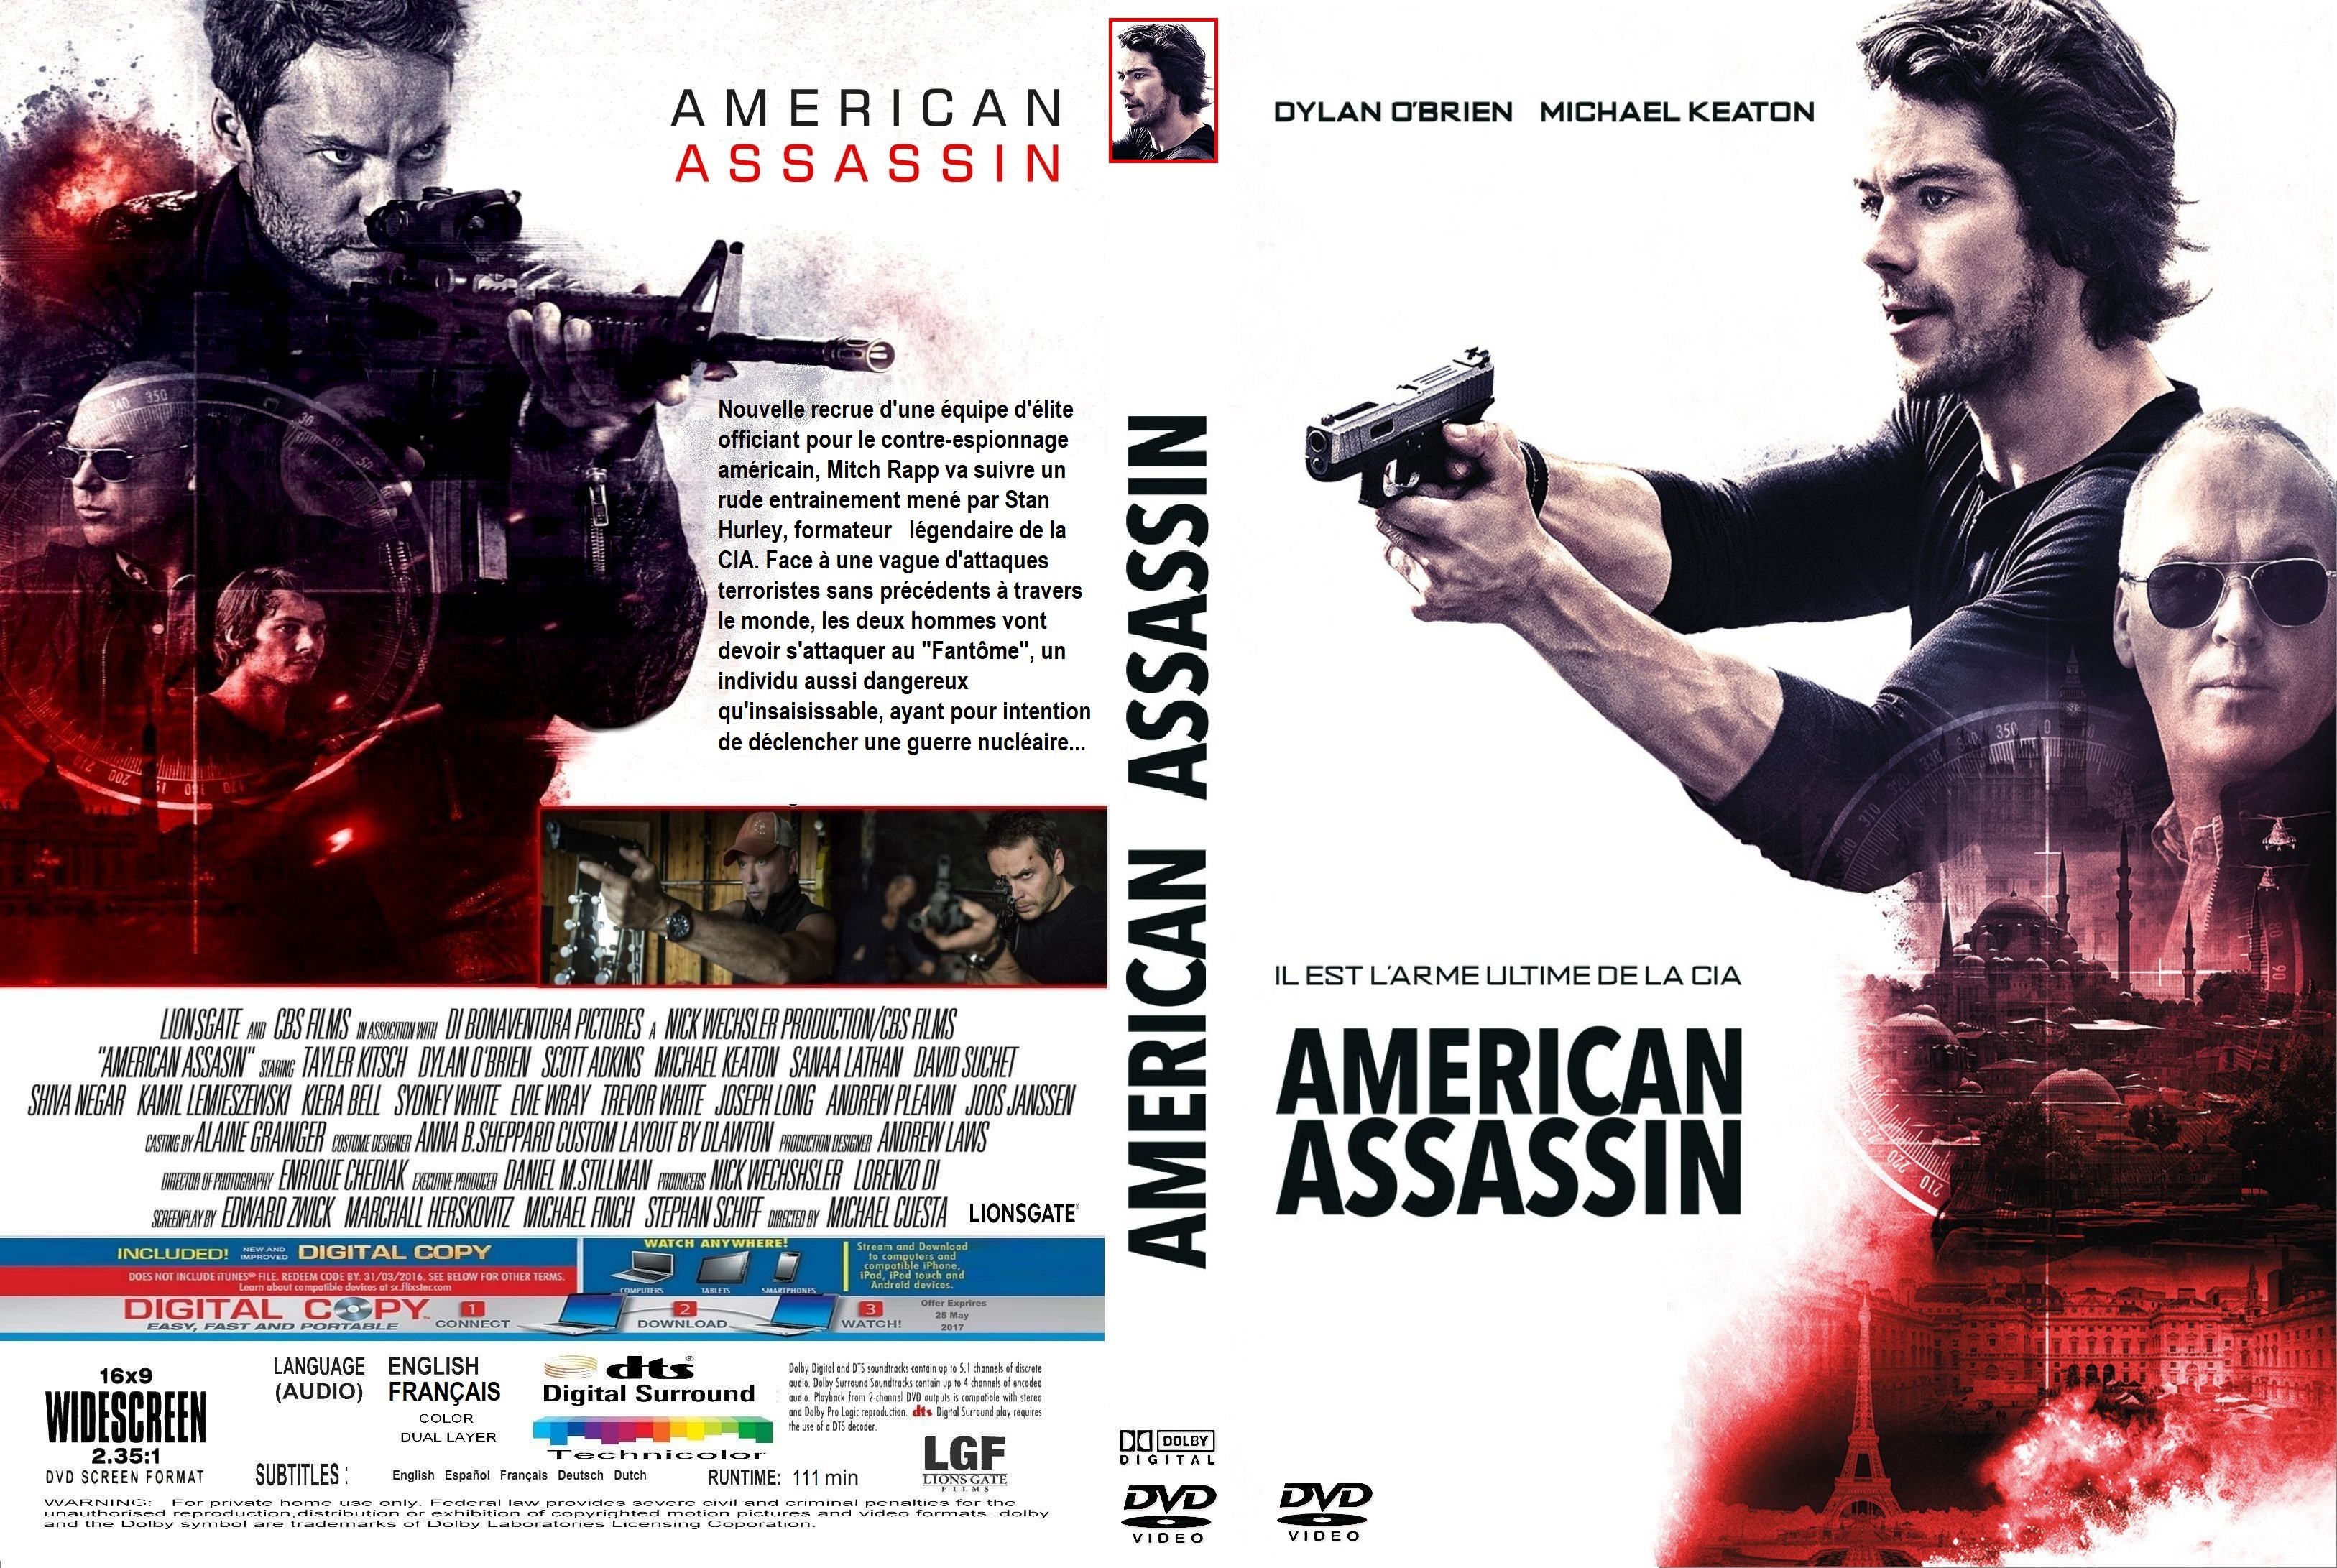 Jaquette DVD American Assassin custom